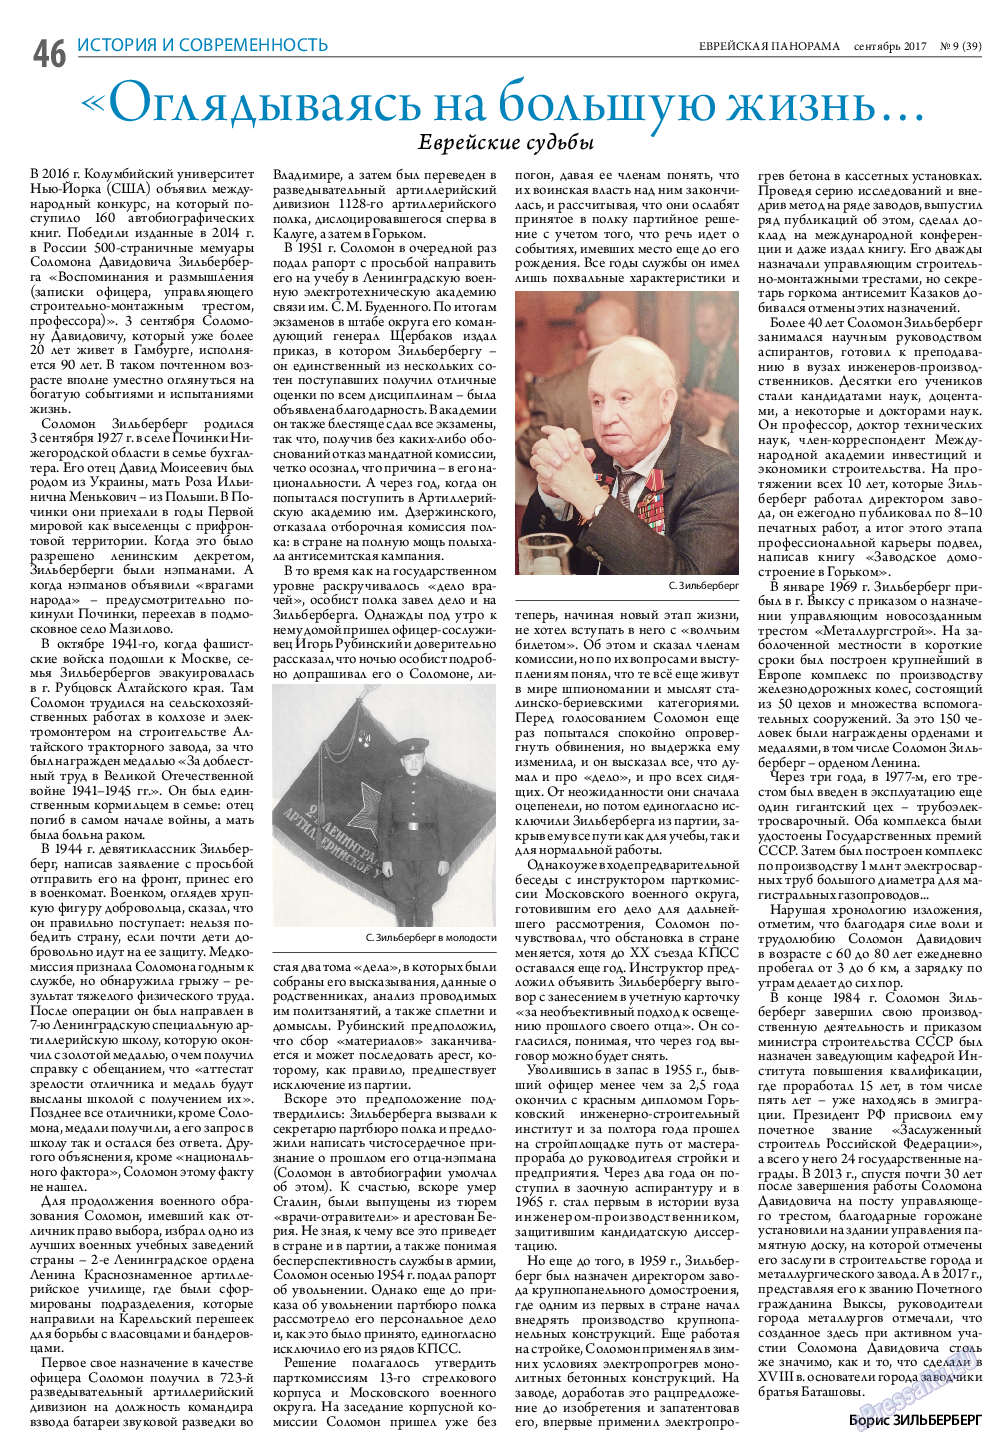 Еврейская панорама, газета. 2017 №9 стр.46